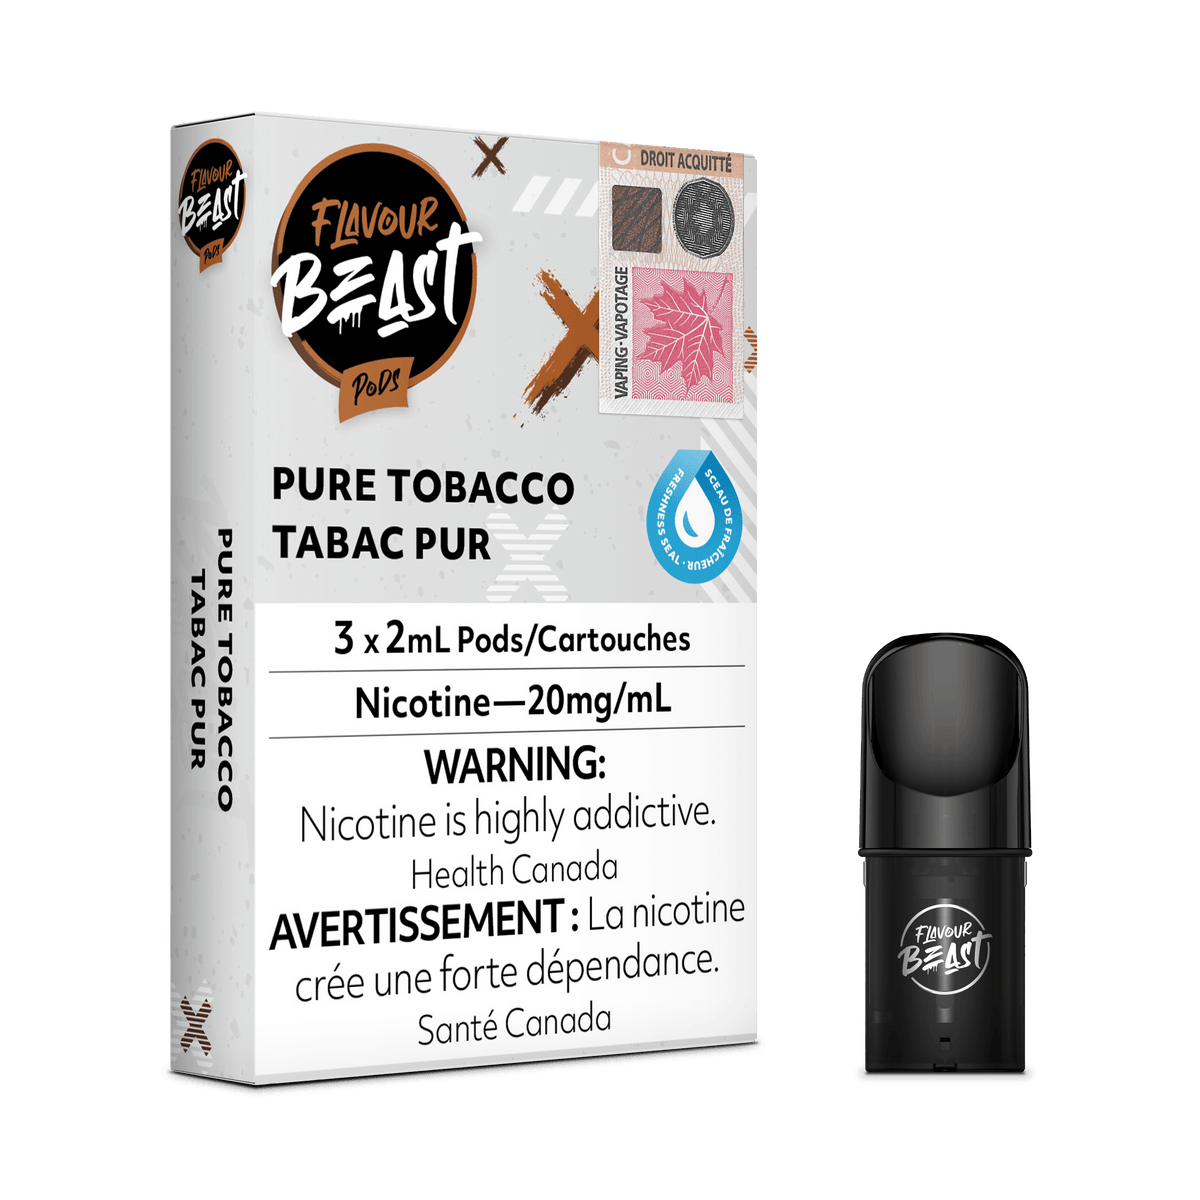 Flavour Beast - Pure Tobacco Vape Pod available on Canada online vape shop